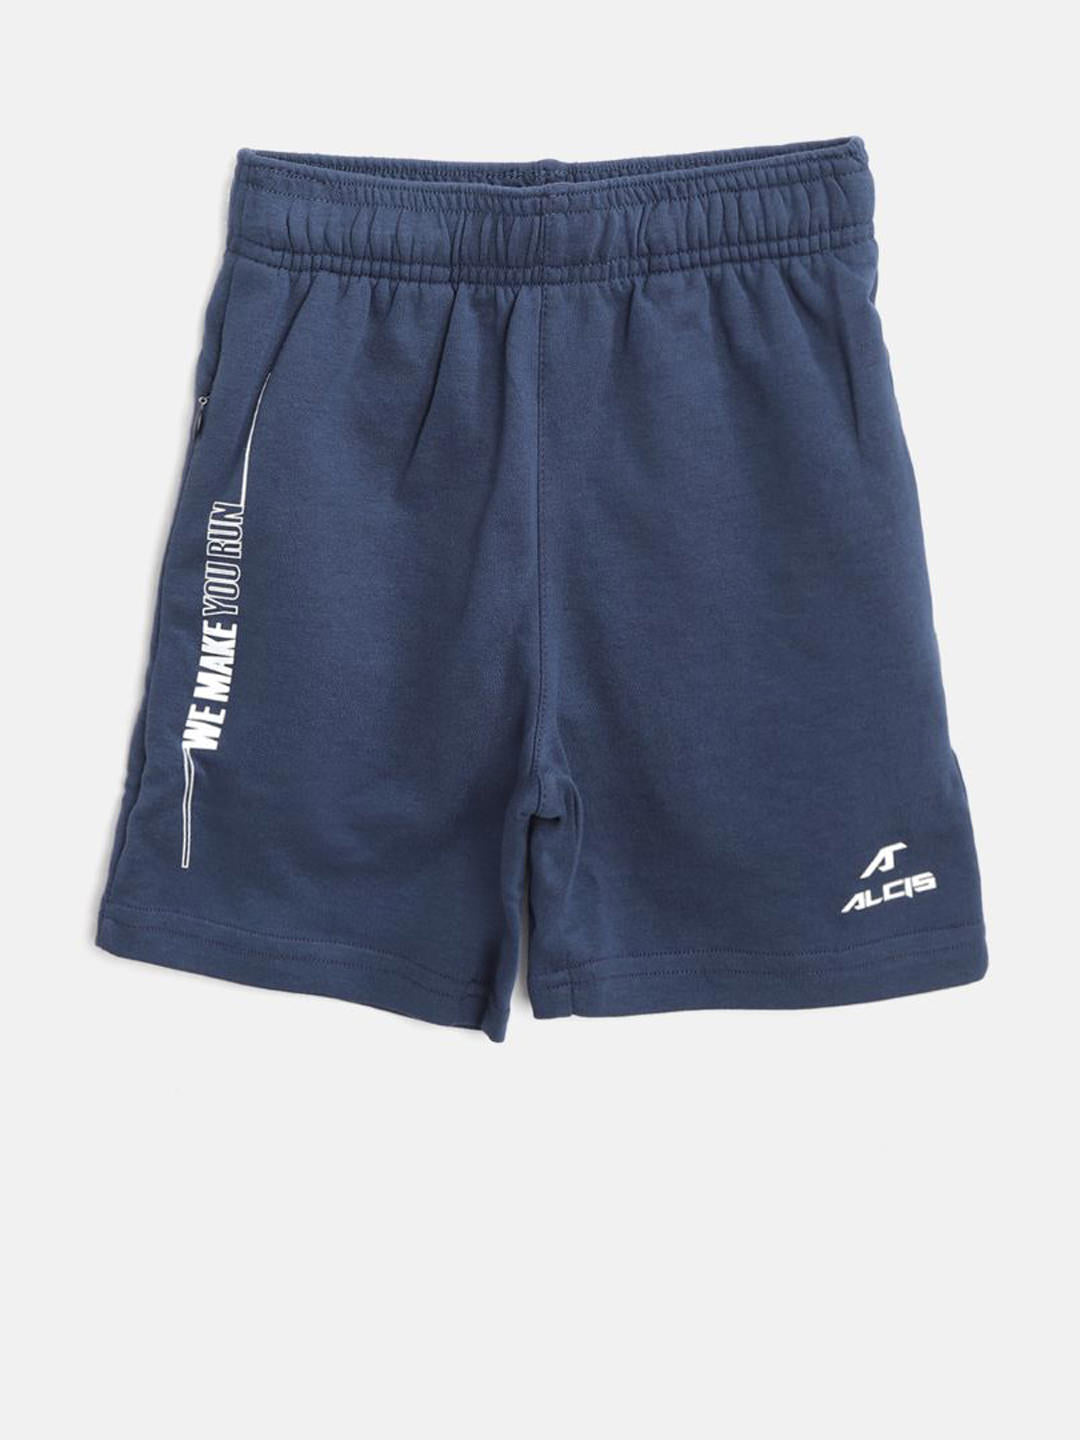 Alcis Boys Navy Blue Solid Slim Fit Running Sports Shorts BKS6182-4